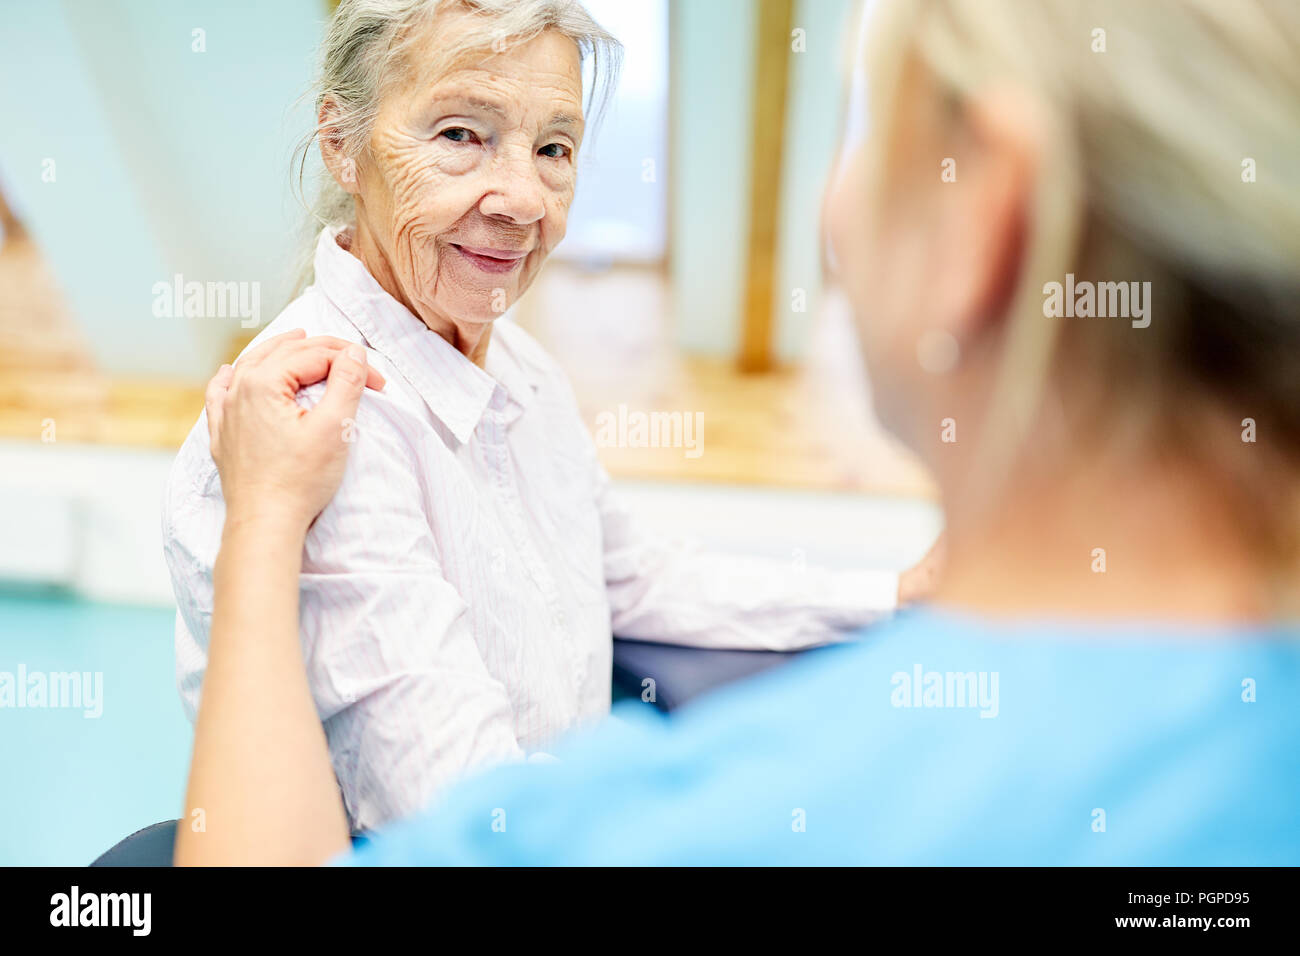 Nursing cares for a senior citizen as a patient with dementia Stock Photo